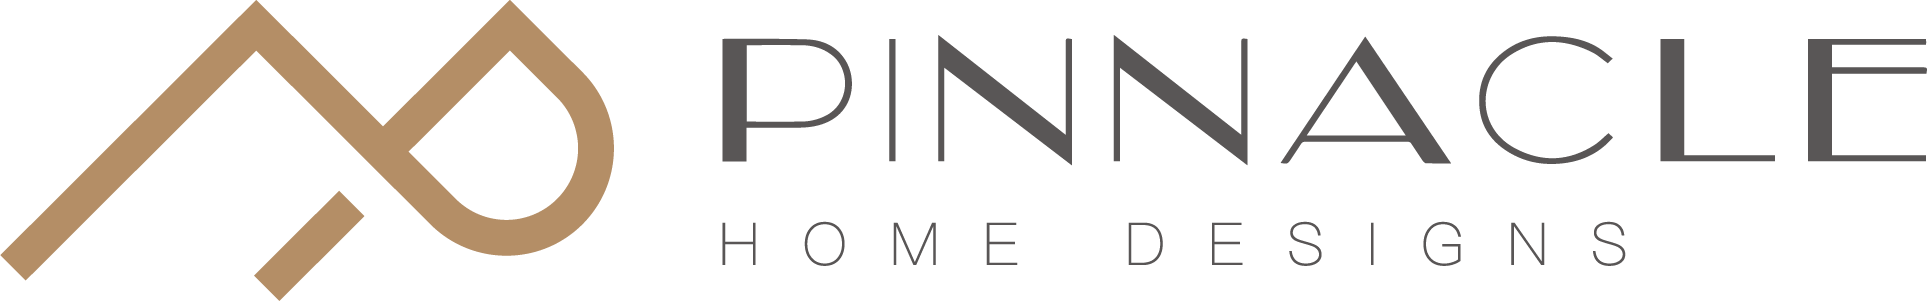 Pinnacle Home Designs